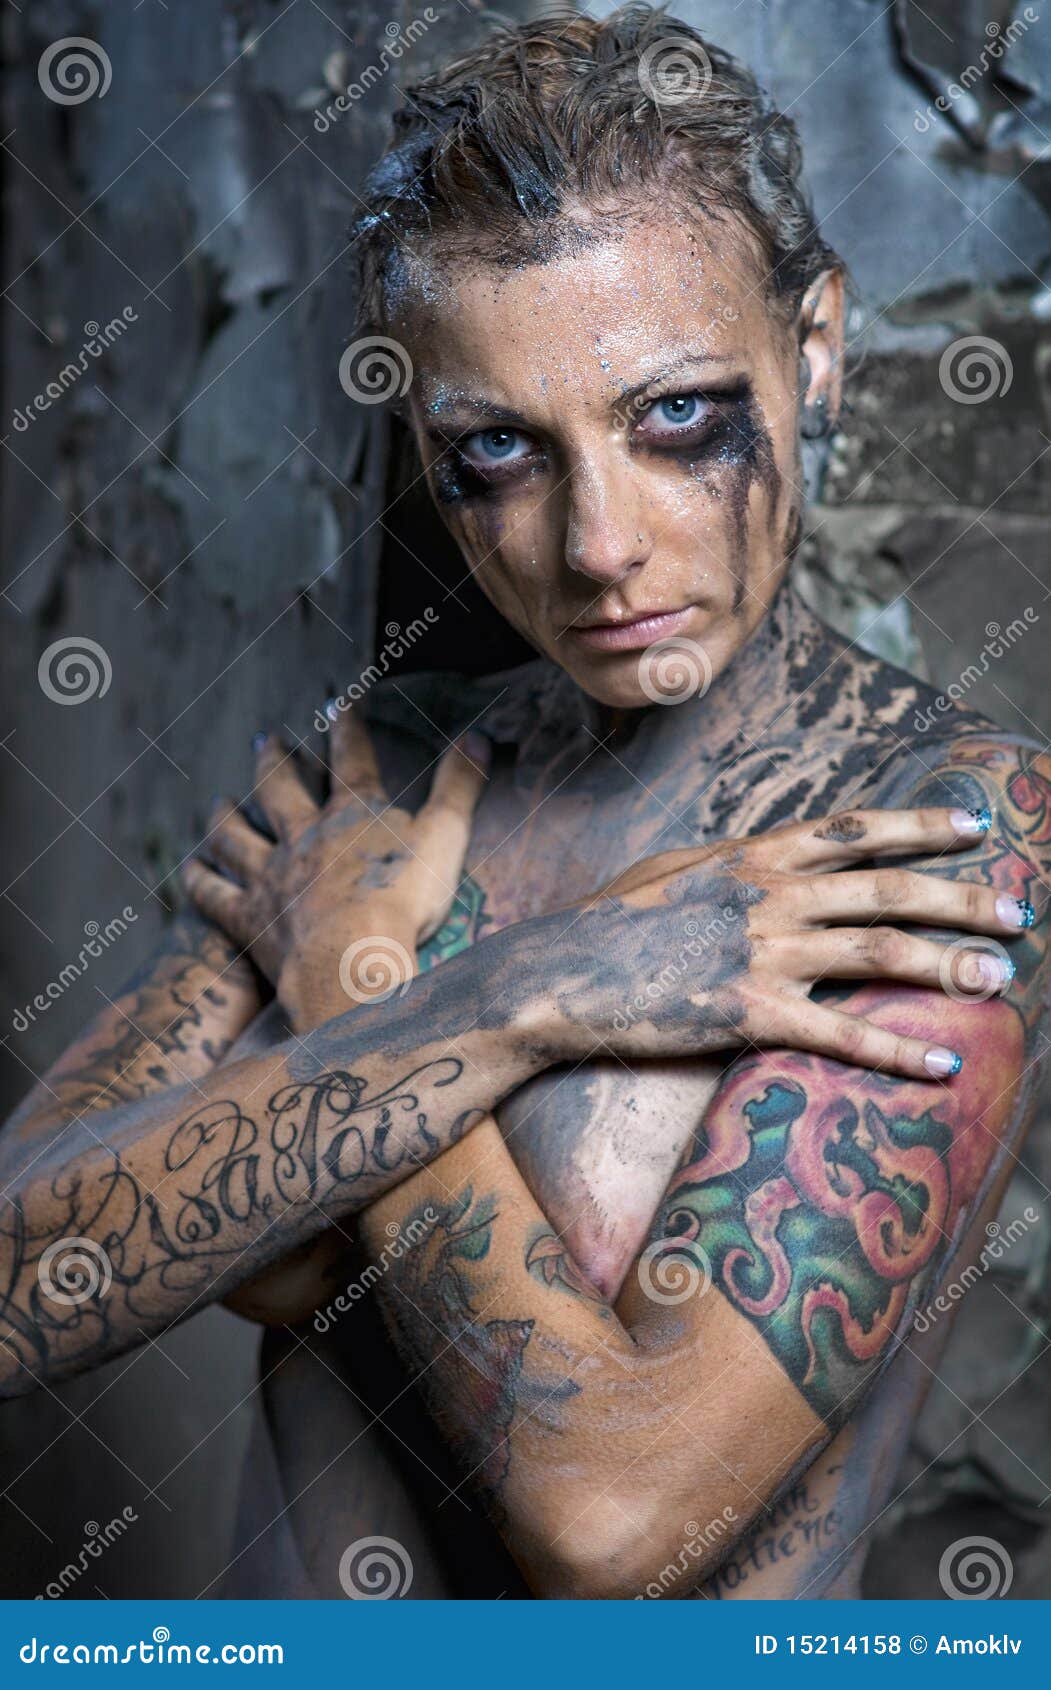 Best of Naked tattooed females